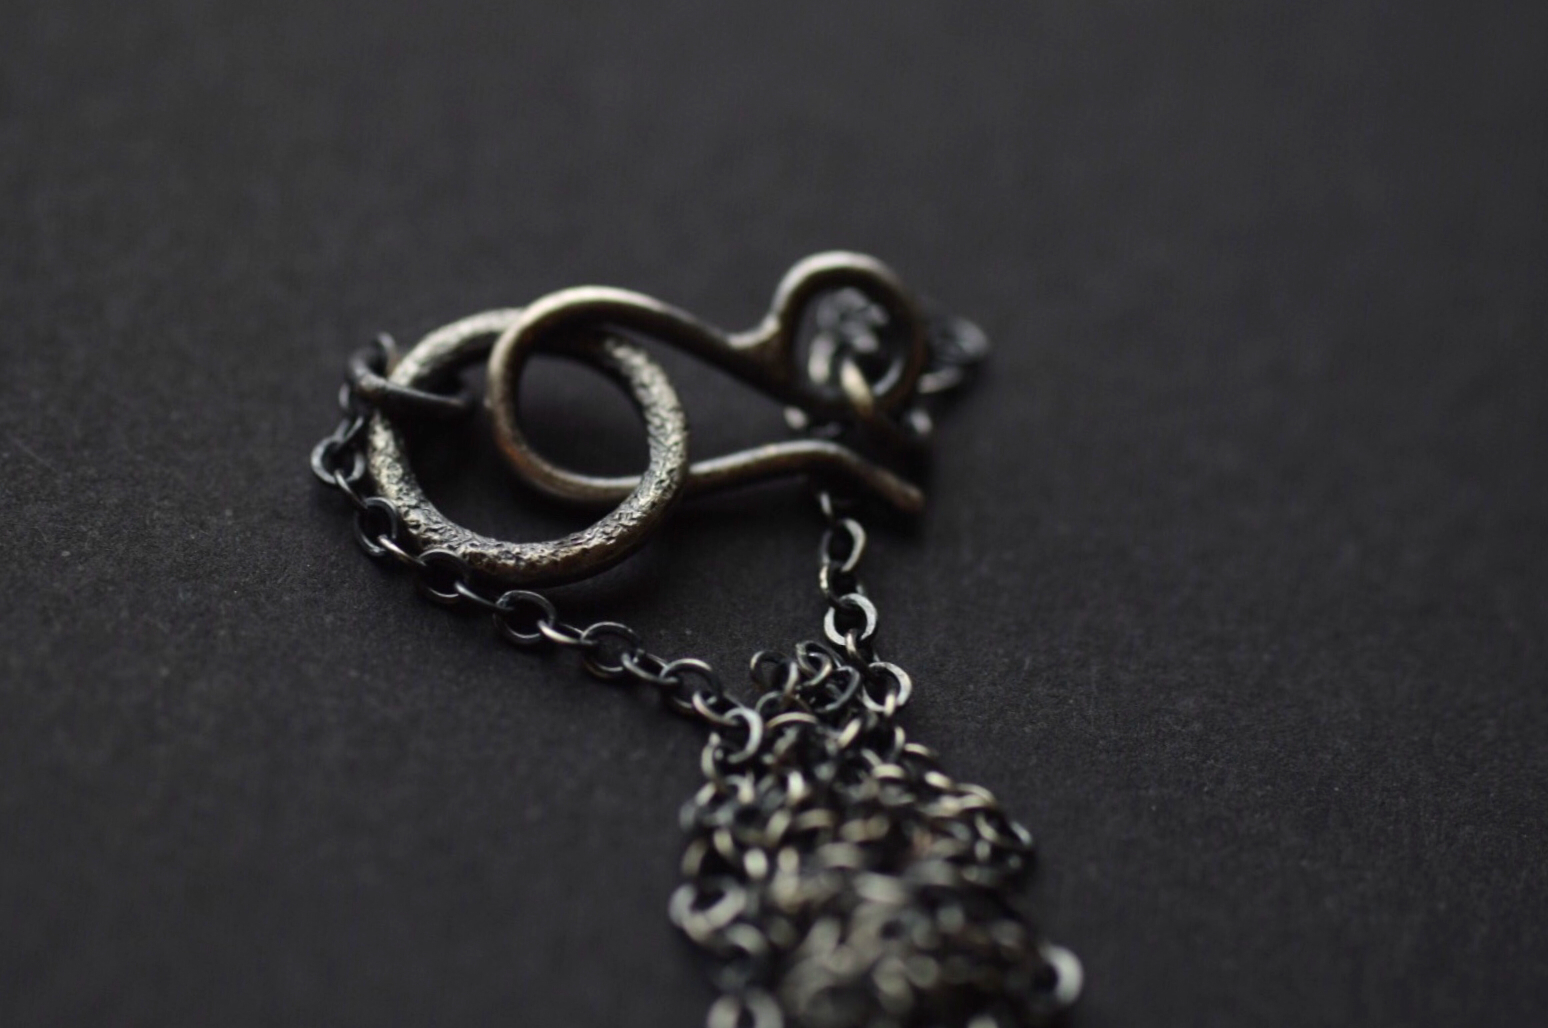 Fern Shadowbox Necklace- 20” Chain